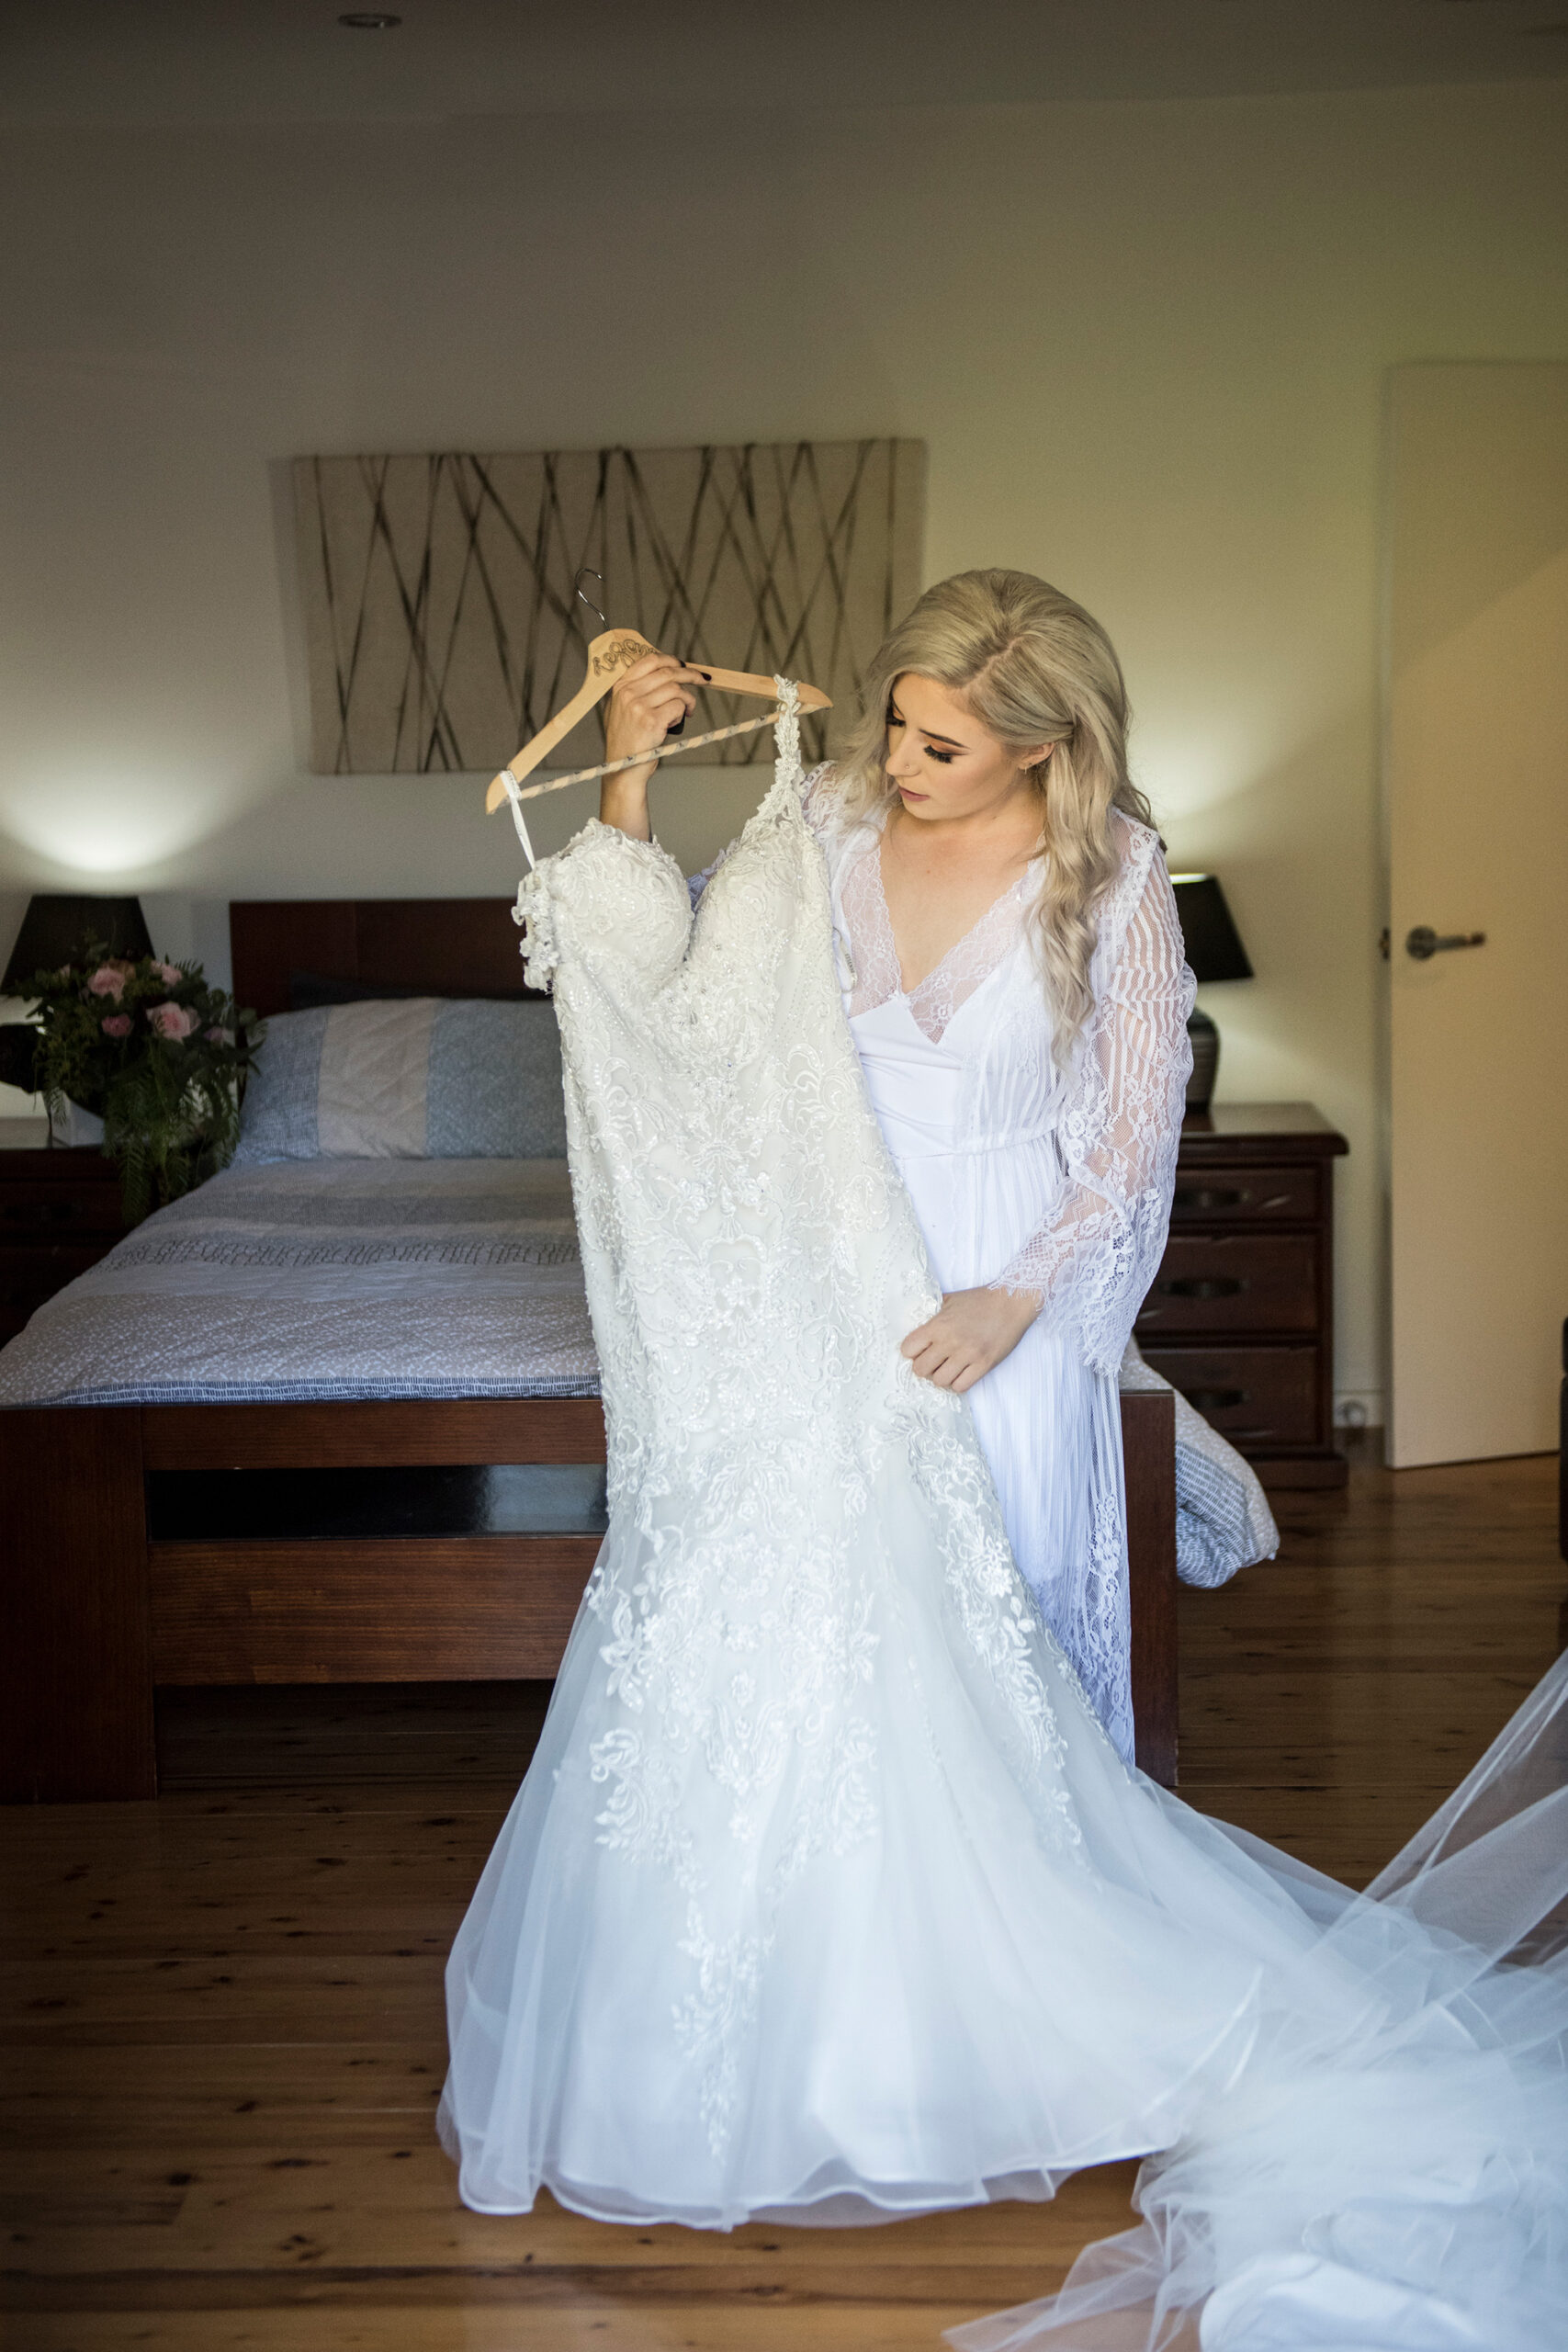 Tegan Matt Romantic Rustic Wedding Sue Davis Photography SBS 008 scaled